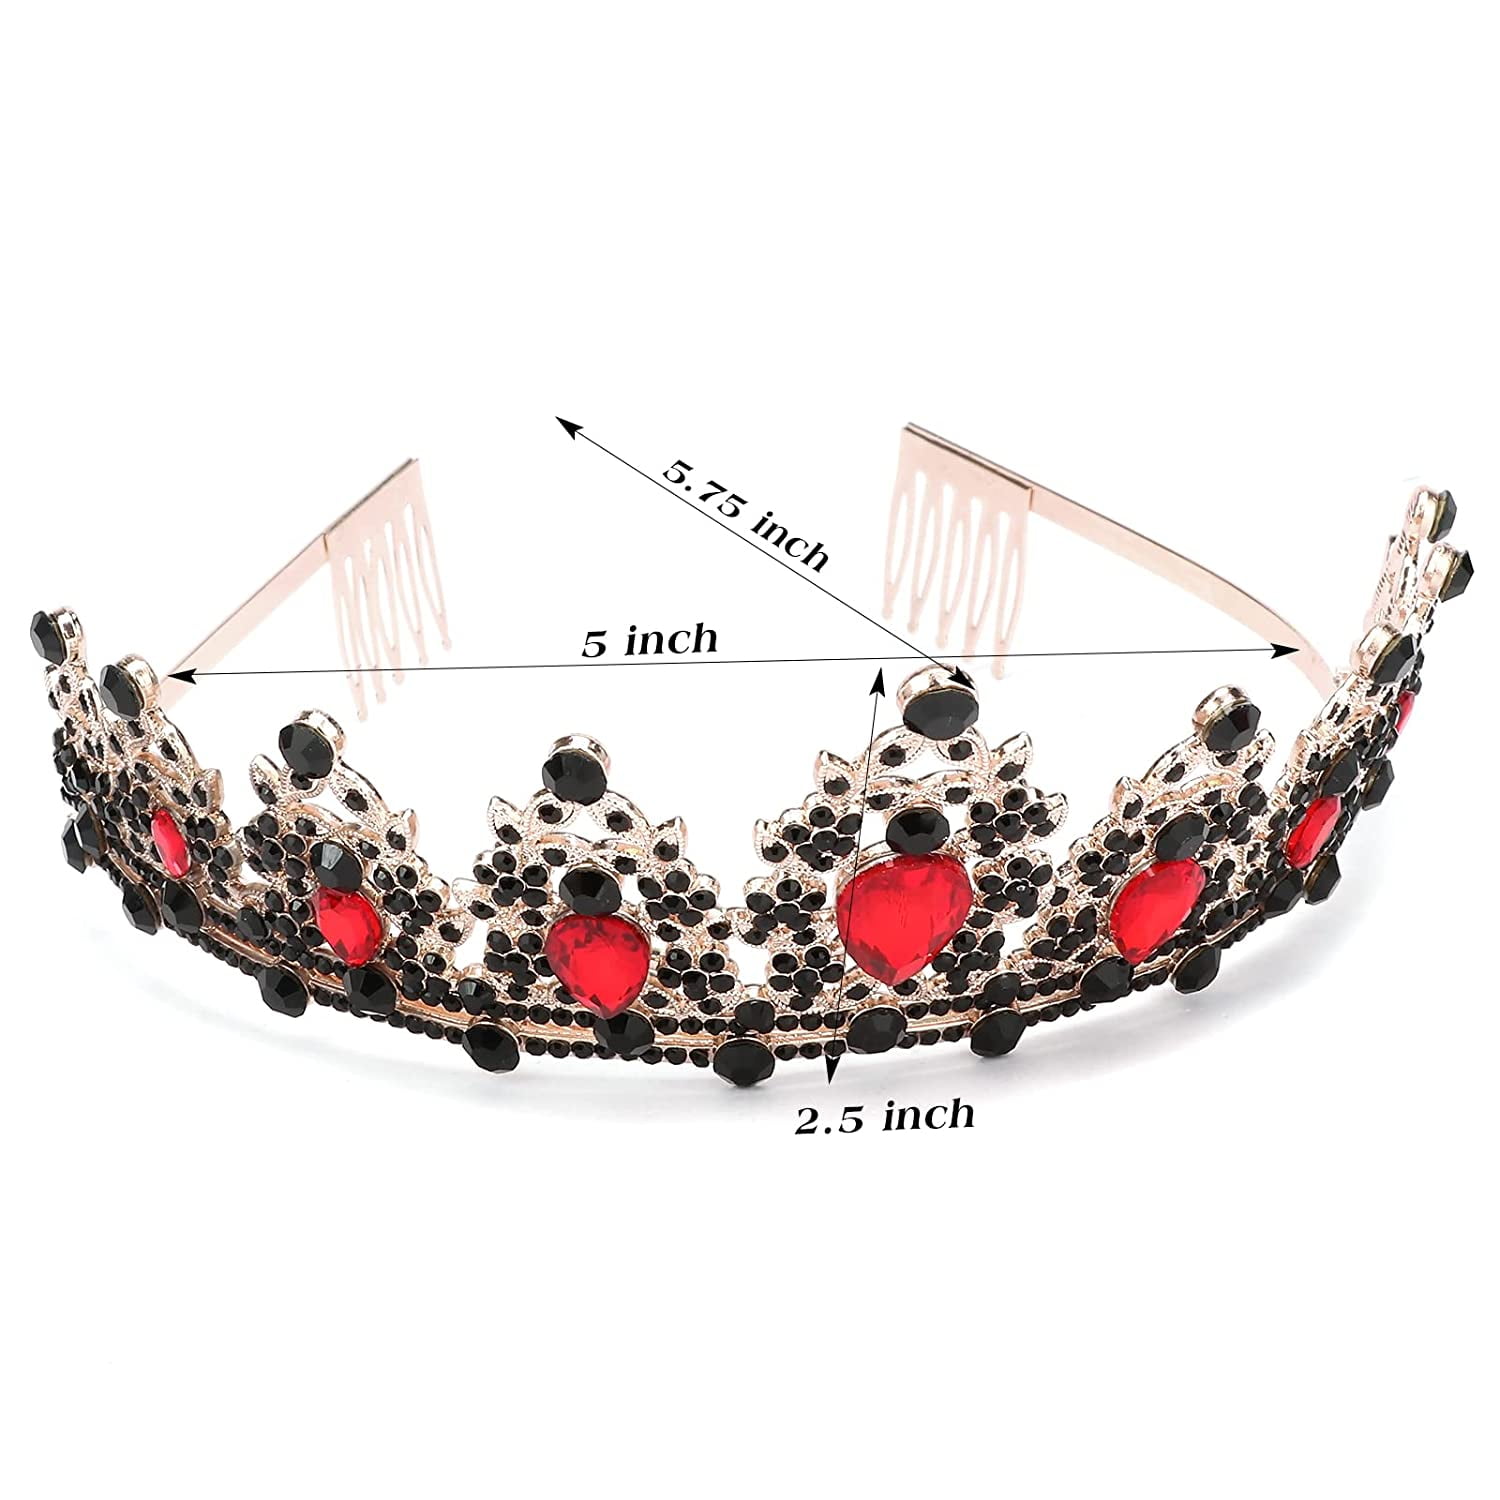  Parliky 4 Pcs Gothic Crowns For Women Tiara Cake